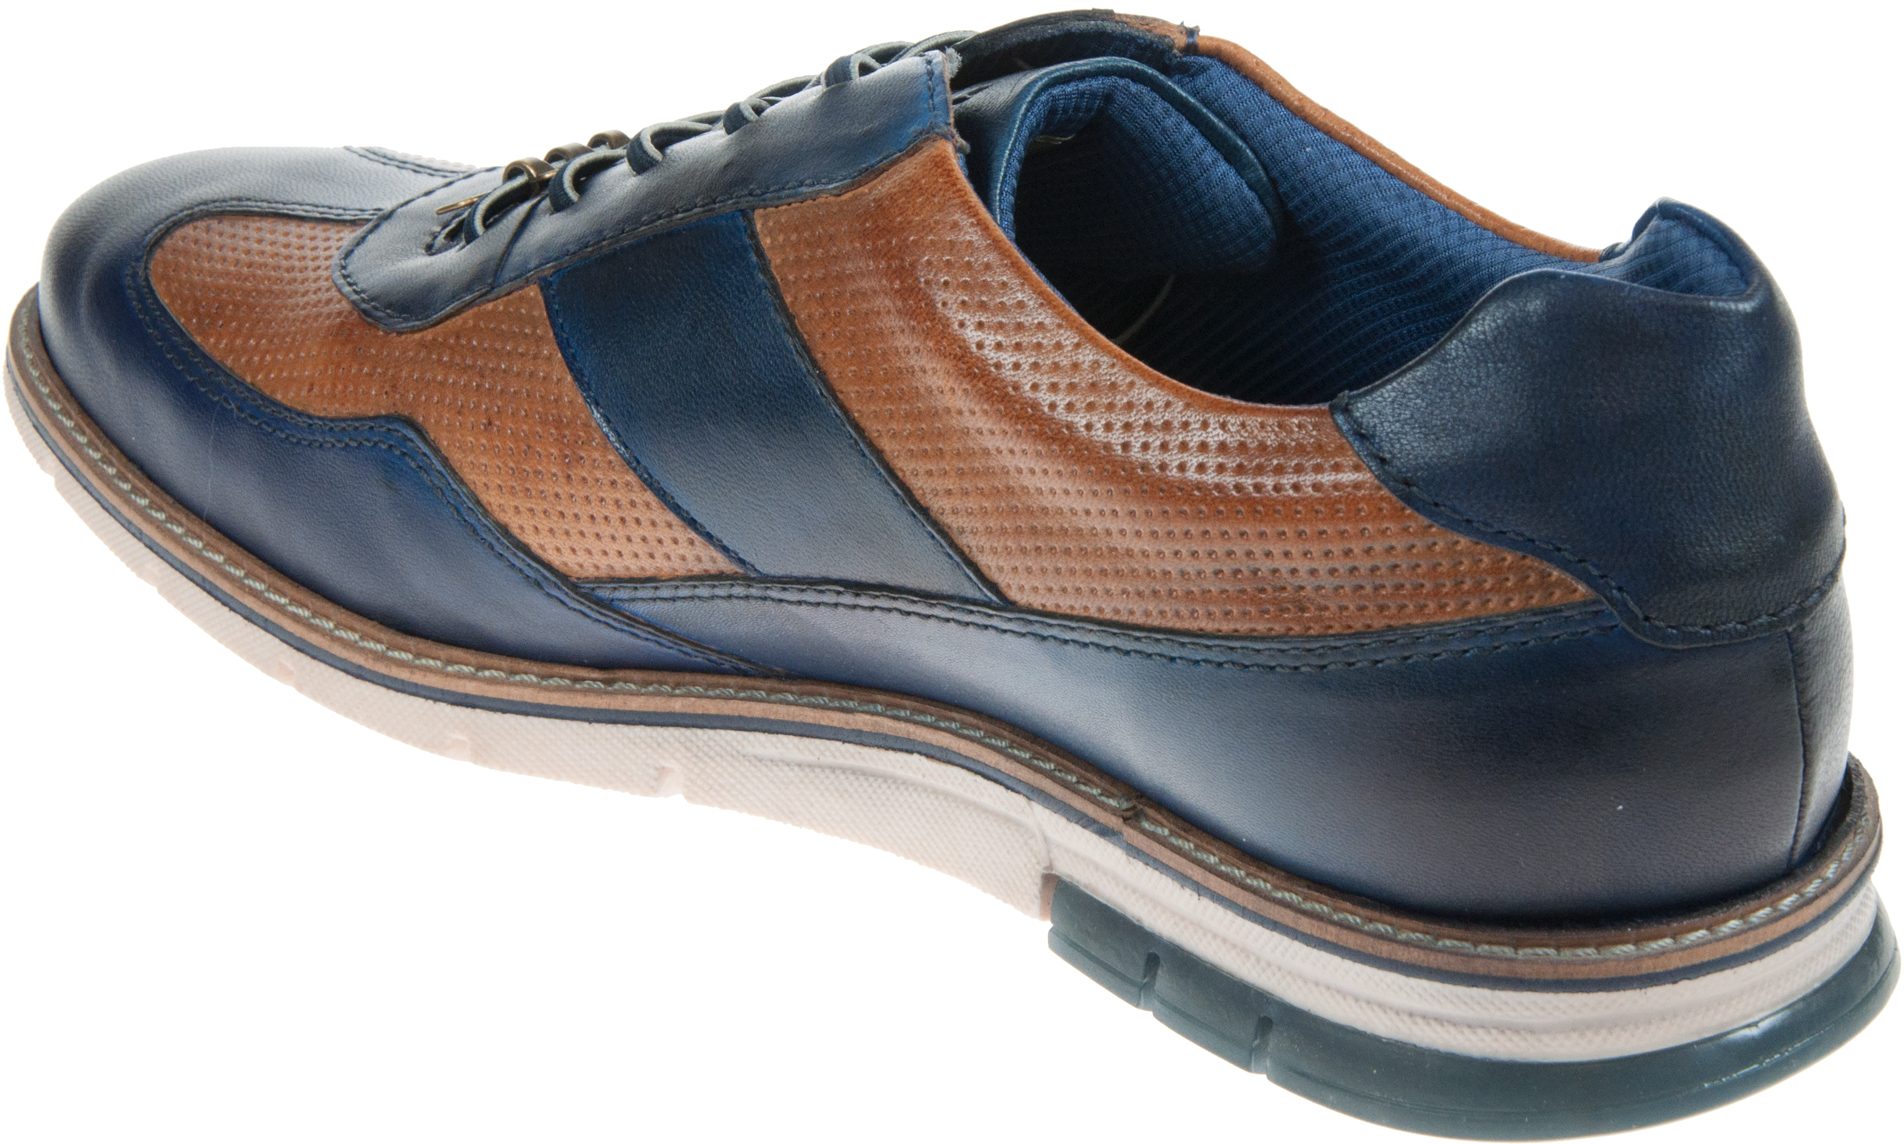 Bugatti Shoes Simone Comfort Dark Blue And Cognac 331 9711c 4141 4163 Casual Shoes Humphries Shoes 8185